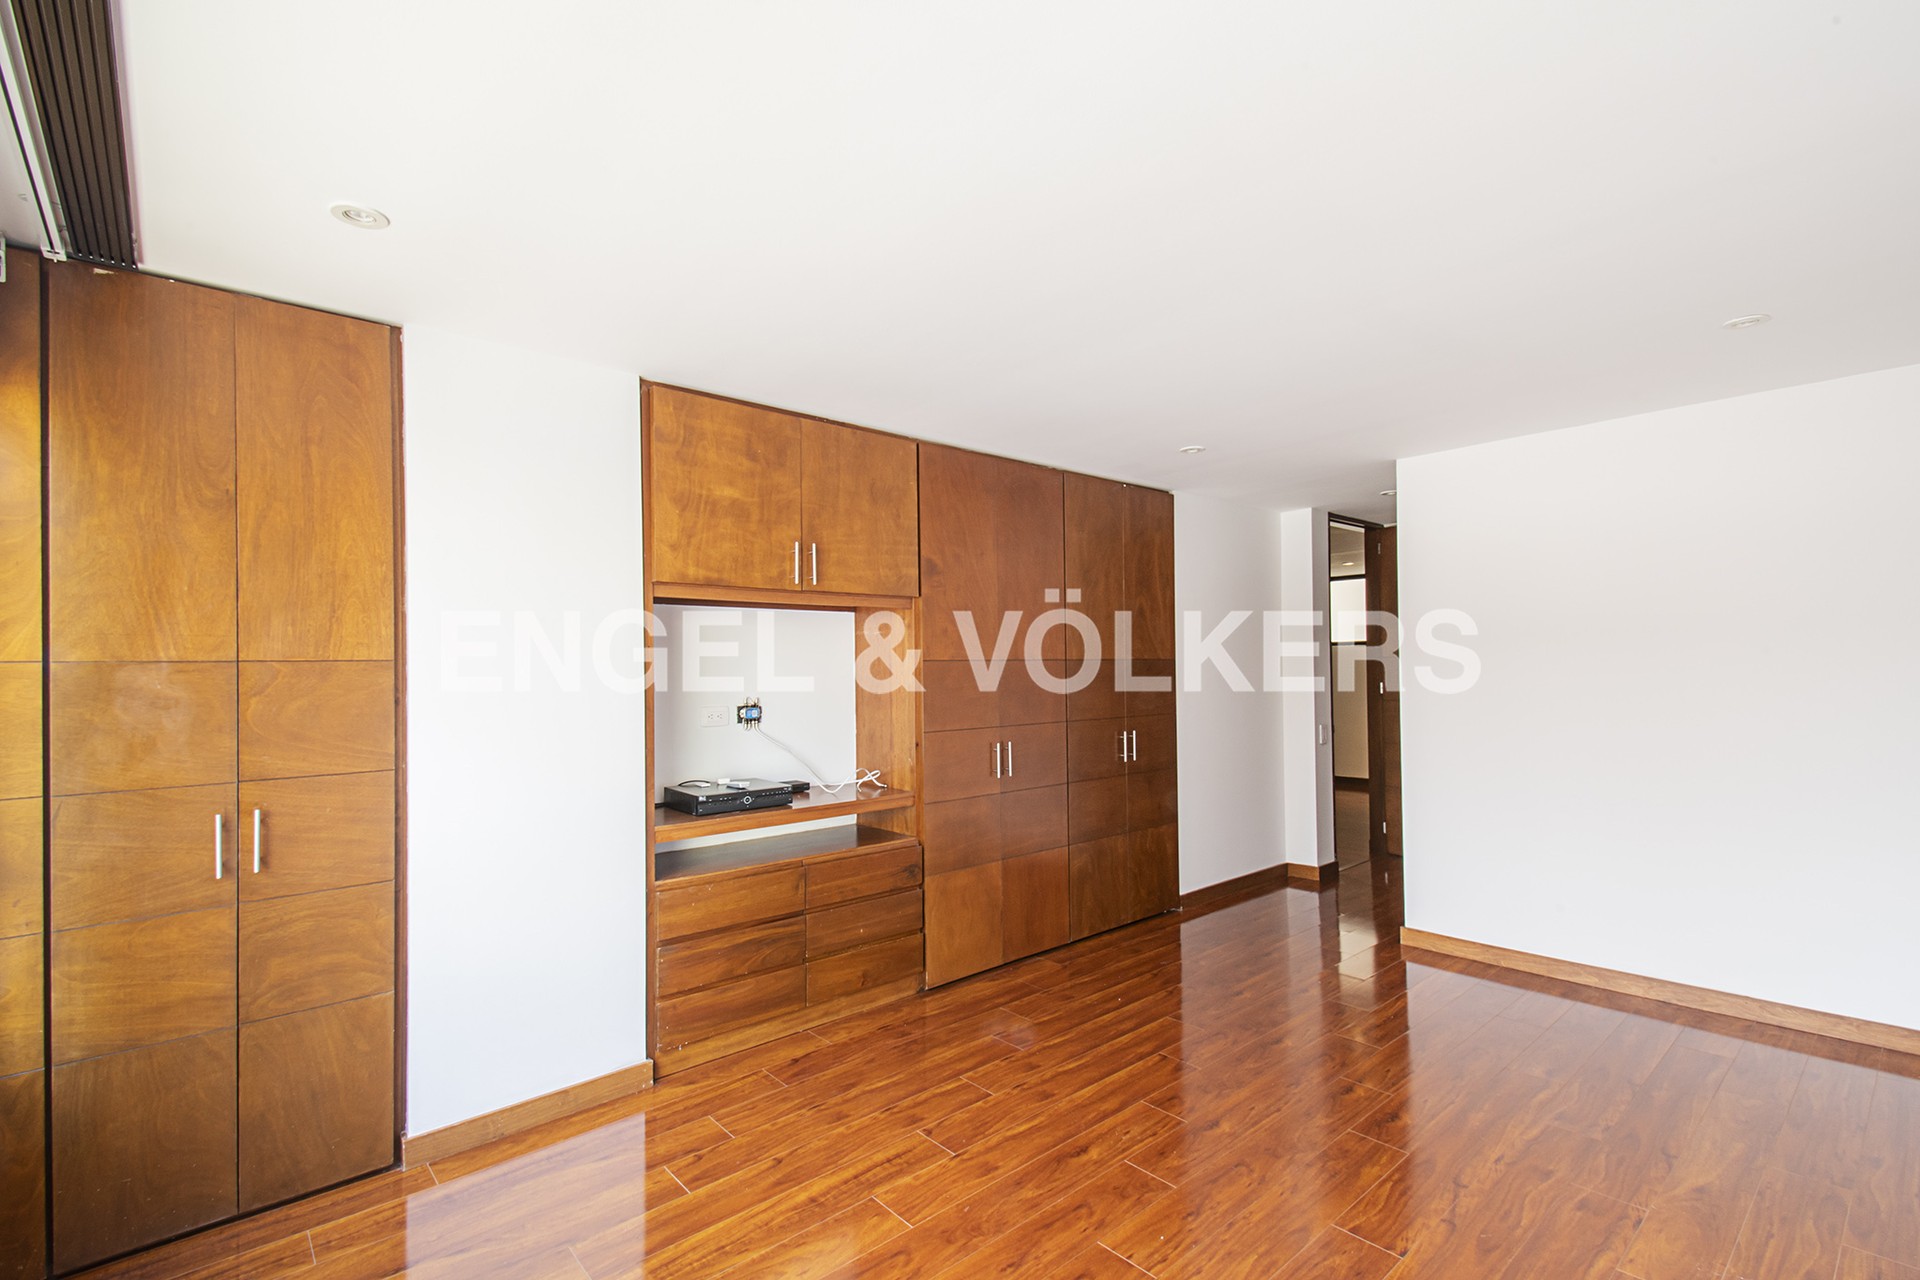 Moderno apartamento para venta en Chicó Navarra